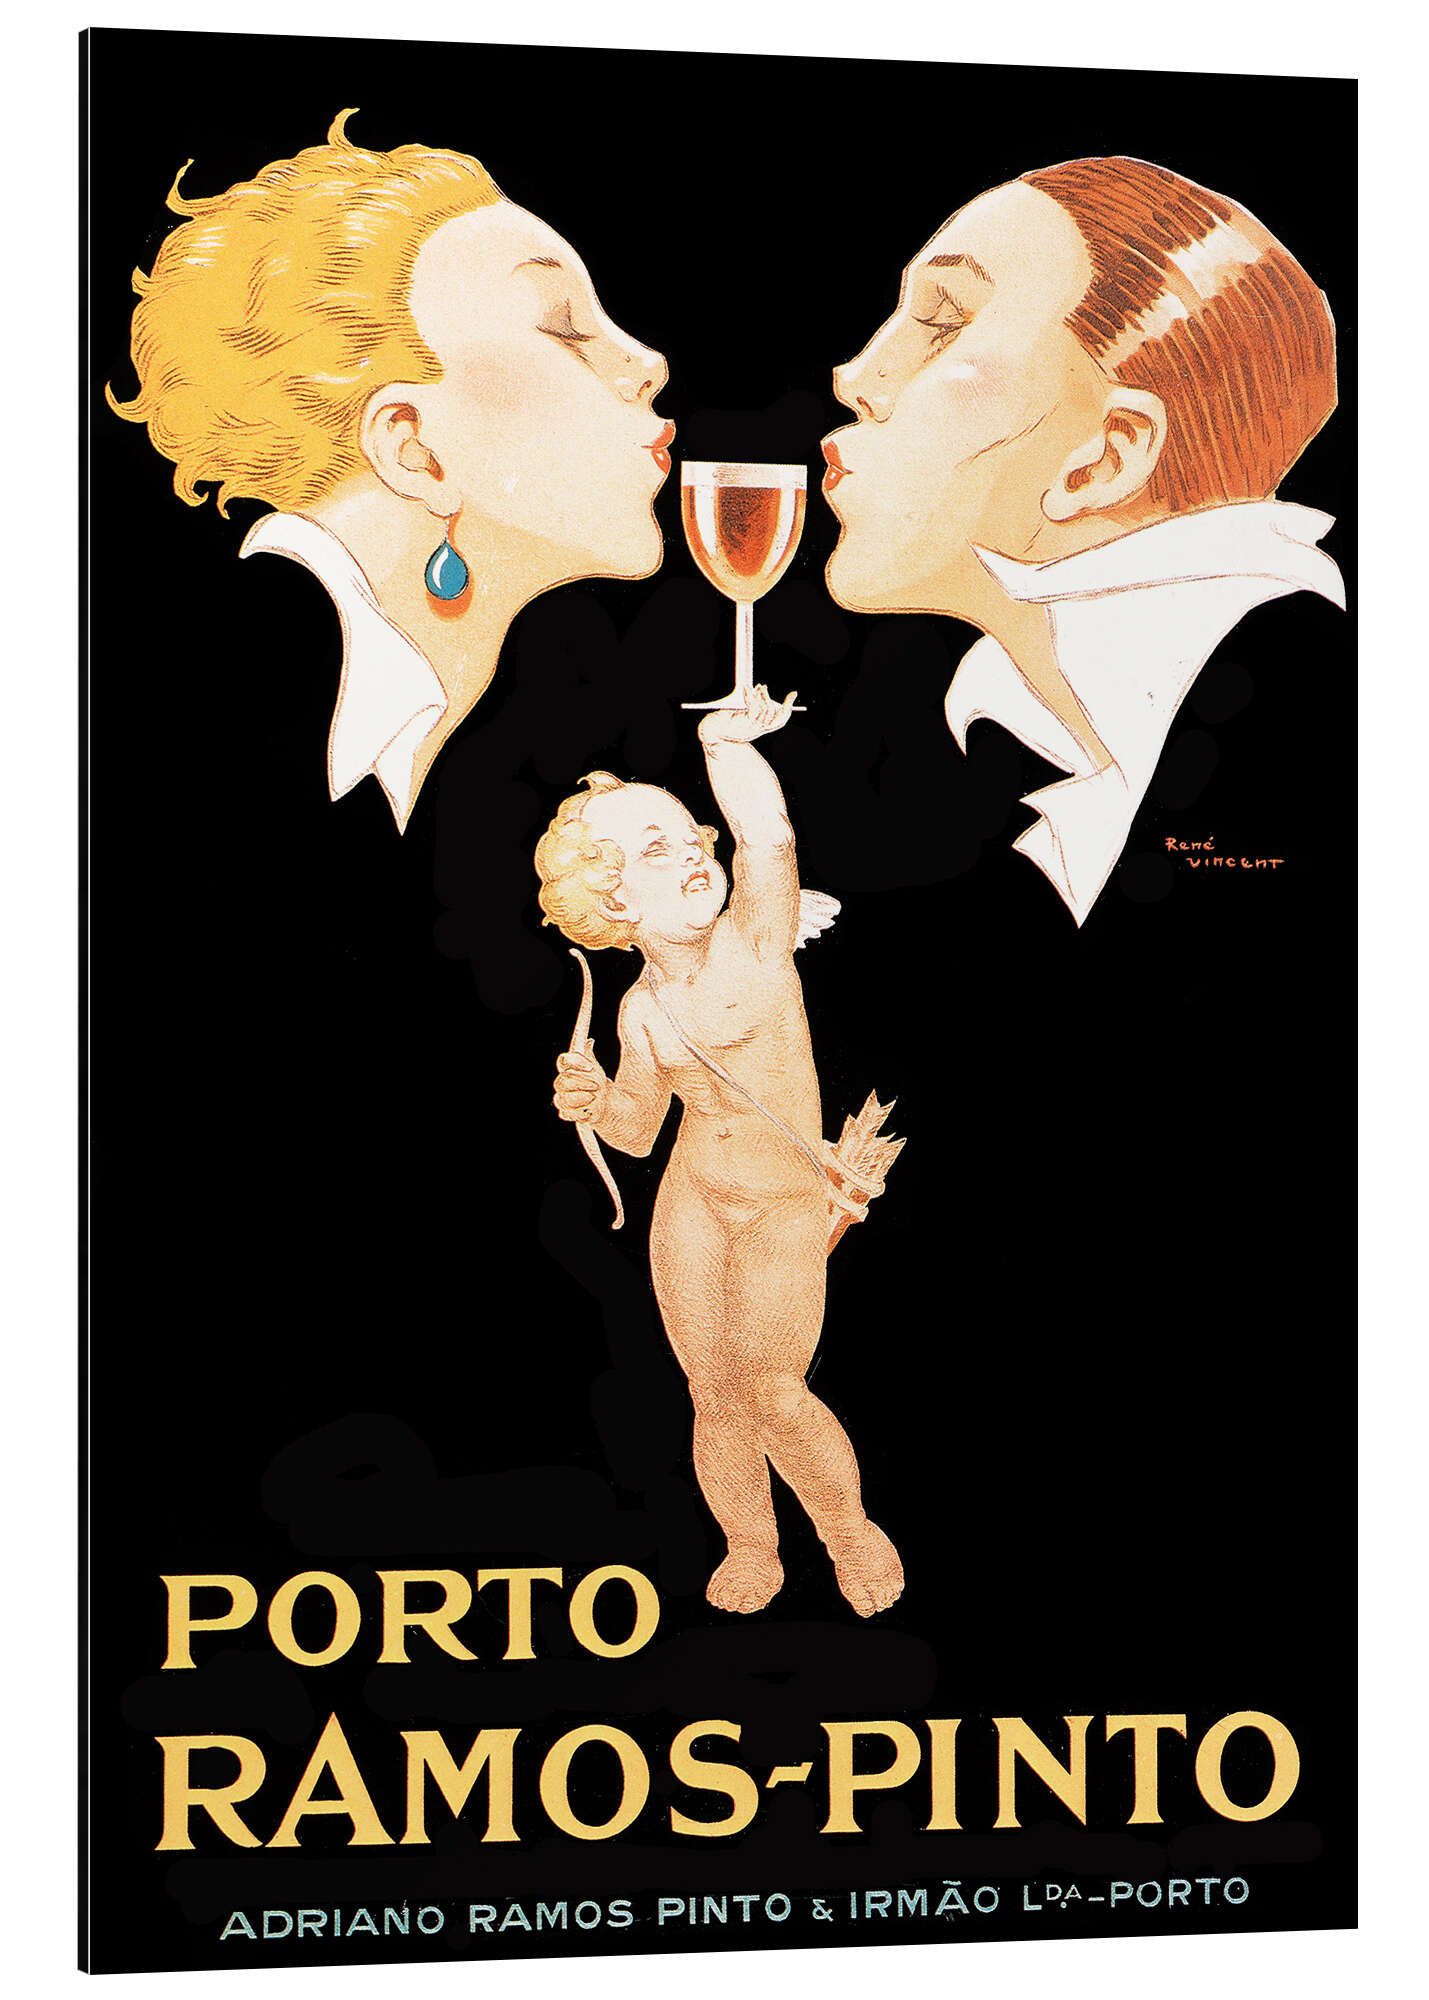 Posterlounge Alu-Dibond-Druck René Vincent, Porto Ramos-Pinto, Bar Vintage Malerei